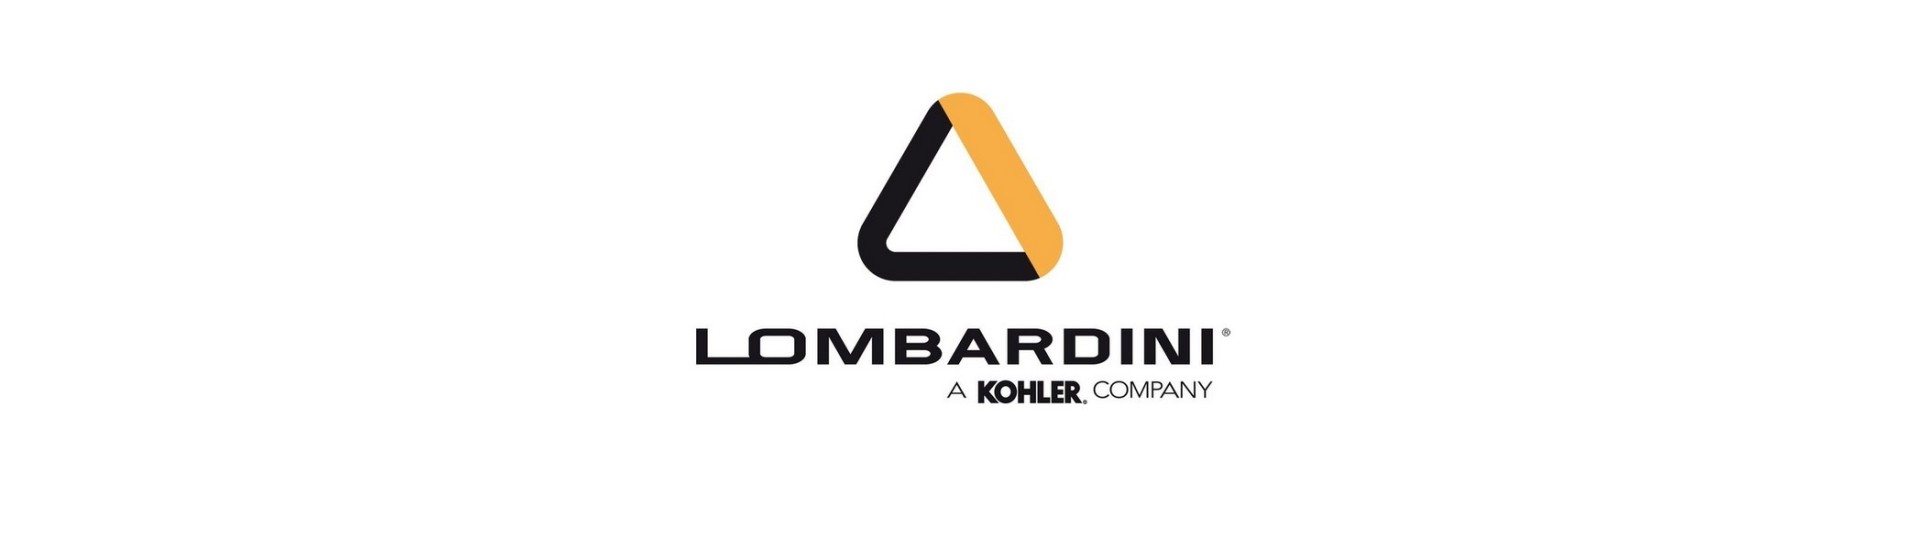 Free engine drain plug at best price Lombardini